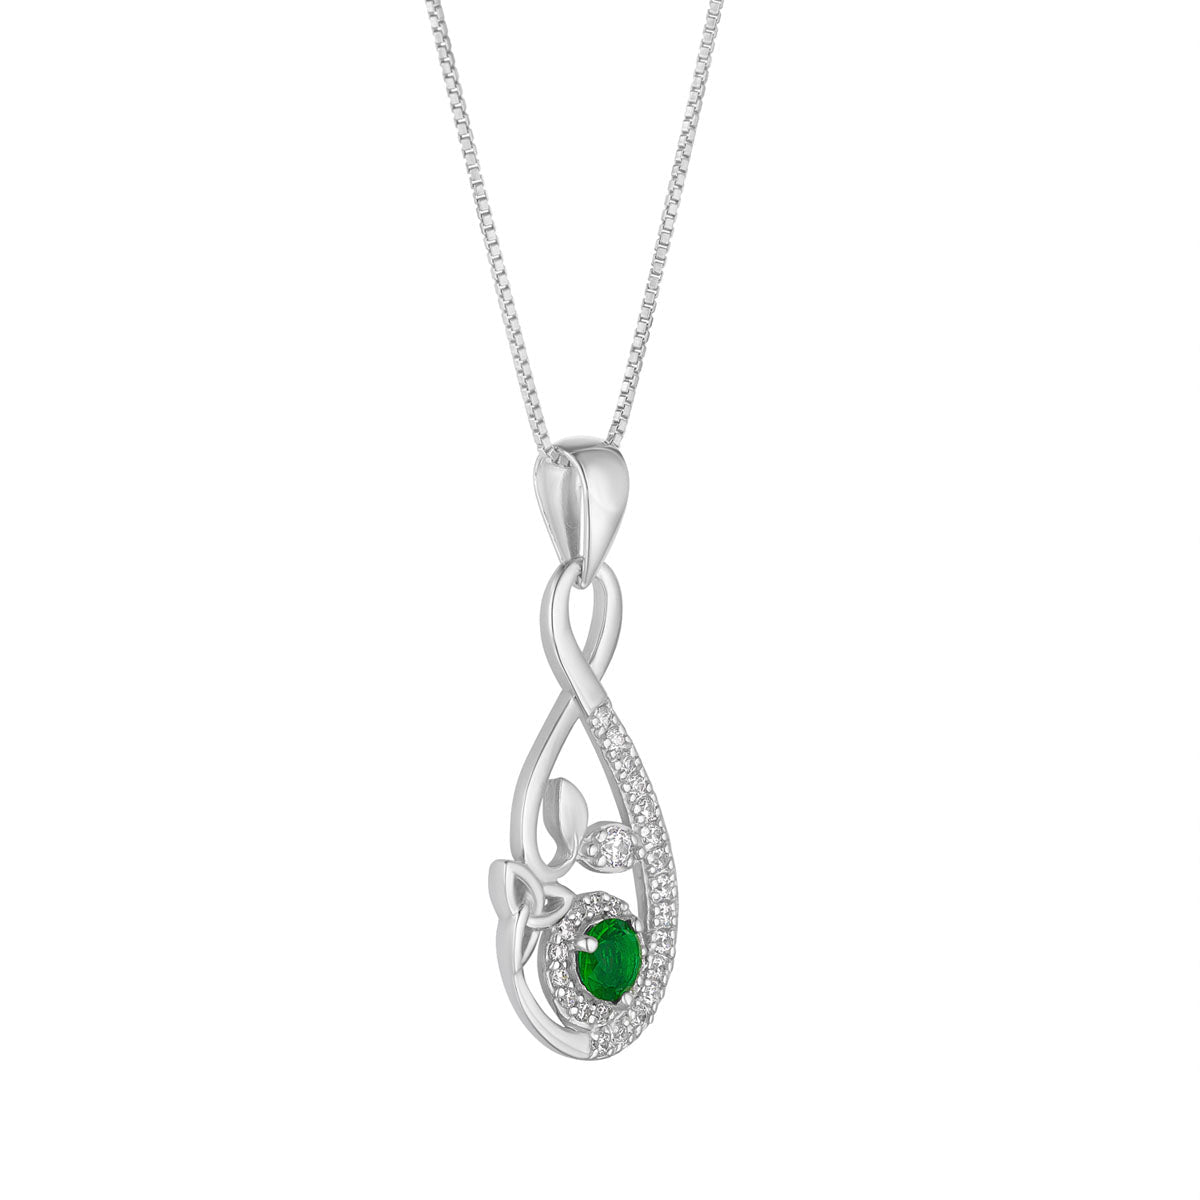 Stock image of Solvar Sterling Silver Green Crystal Celtic Drop Necklace S46939